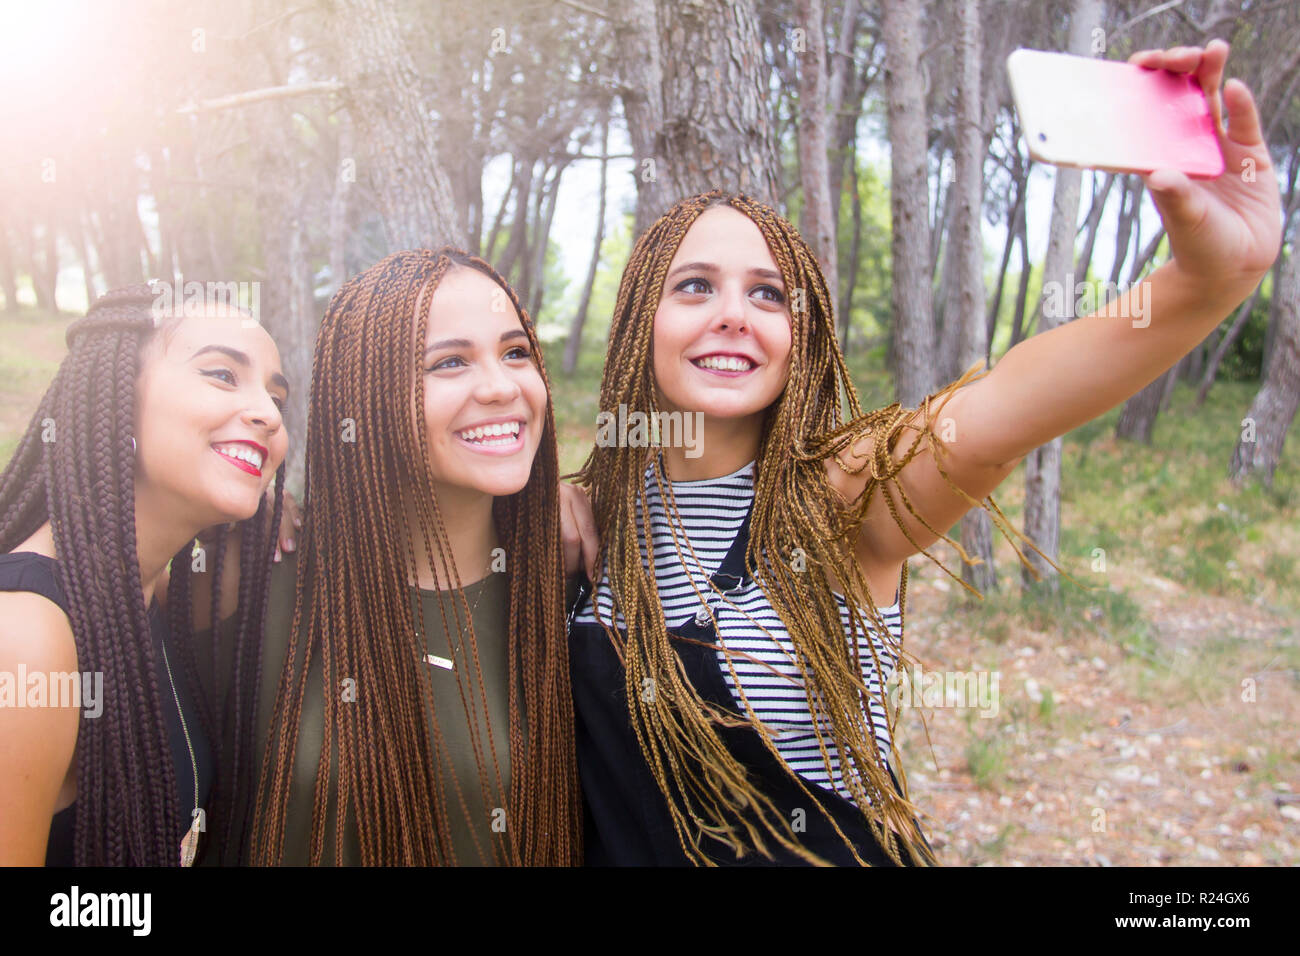 Top 10 Cute Selfie Poses | Selfie Poses For Girls | Santoshi Megharaj -  YouTube